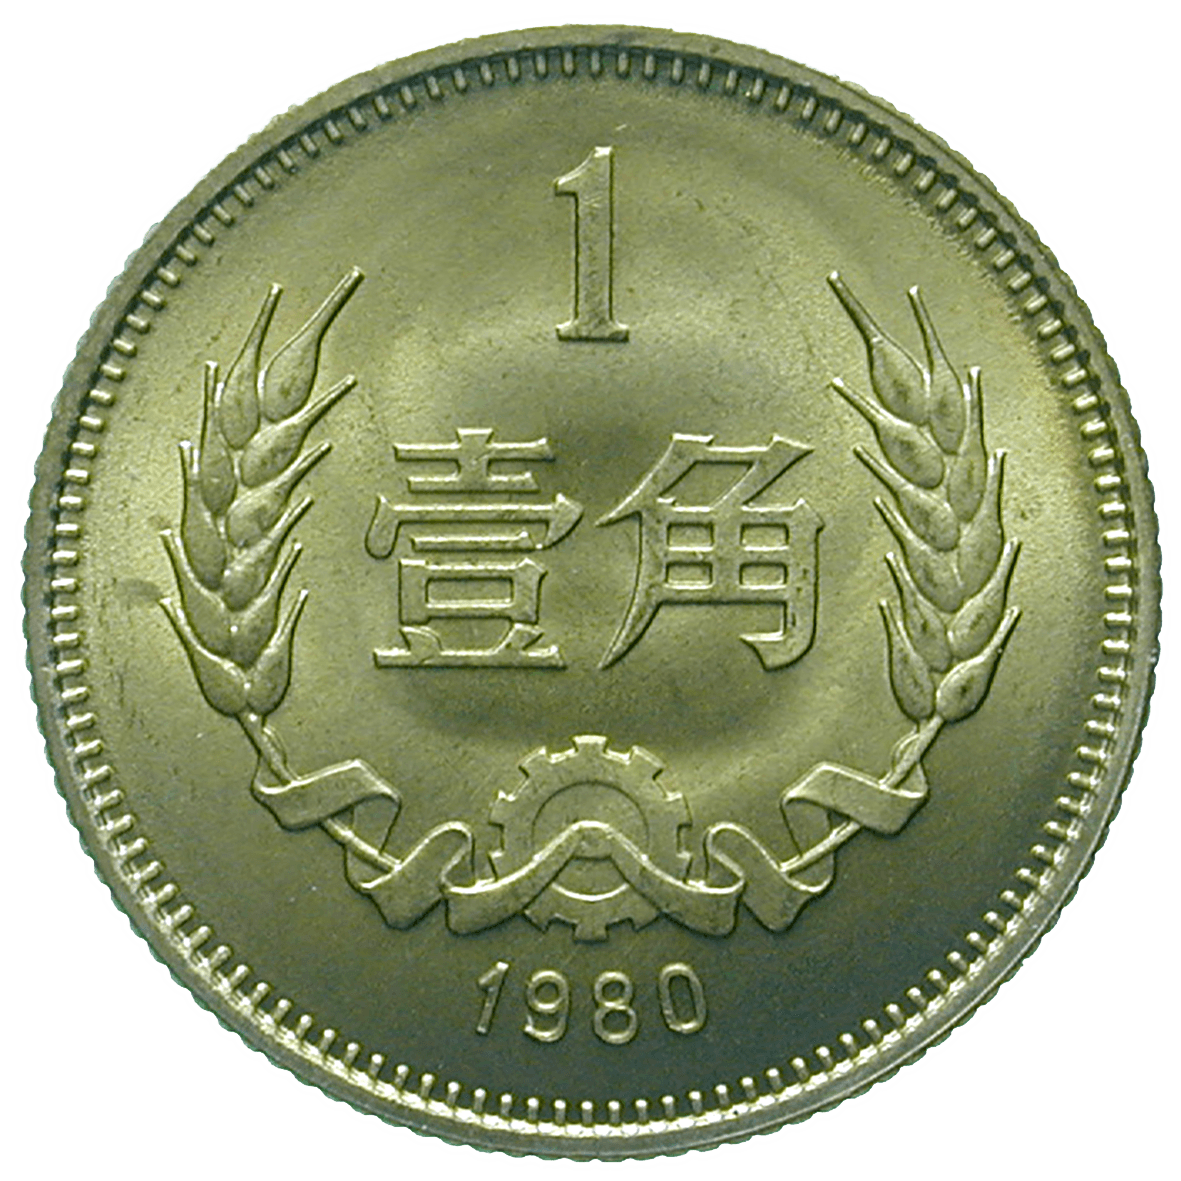 Volksrepublik China, 1 Jiao 1980 (reverse)